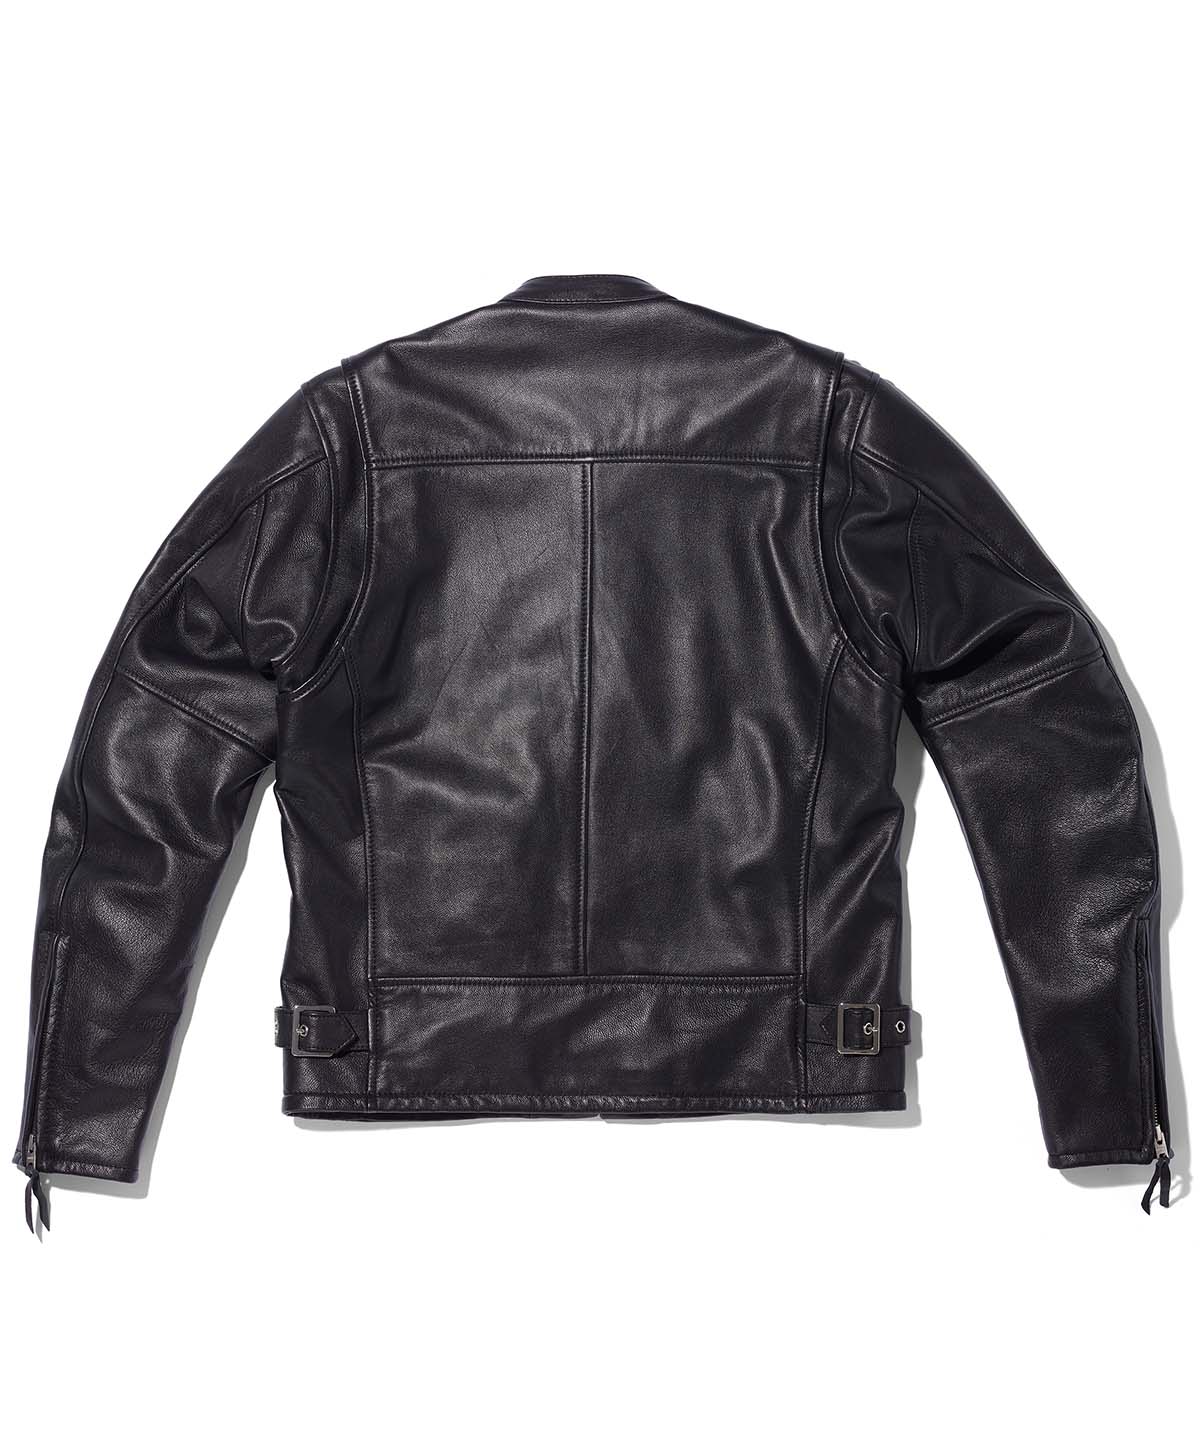 Leather jacket single leather jacket | Kadoya official online shop 